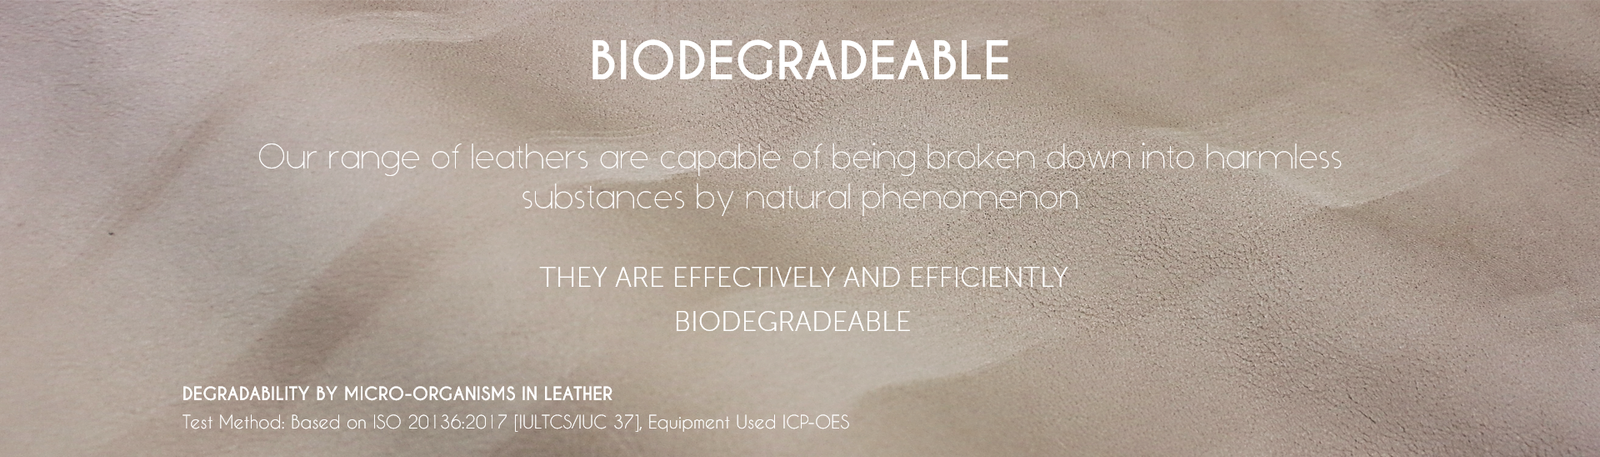 http://www.sscgrp.com/wp-content/uploads/2022/04/Biodegradable.png